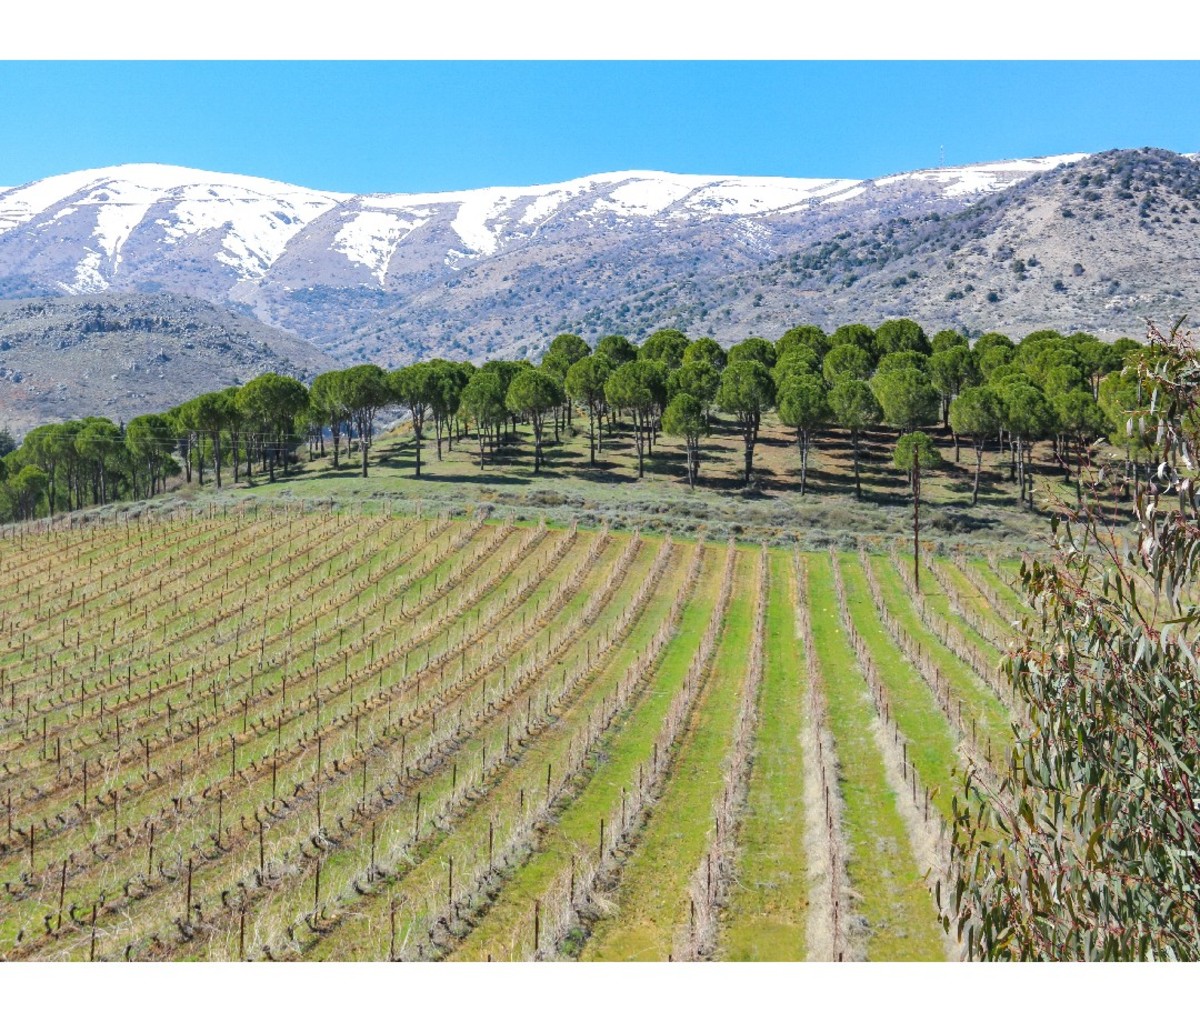 Vineyard in Kefrayya, in Lebanon's western Bekaa Valley